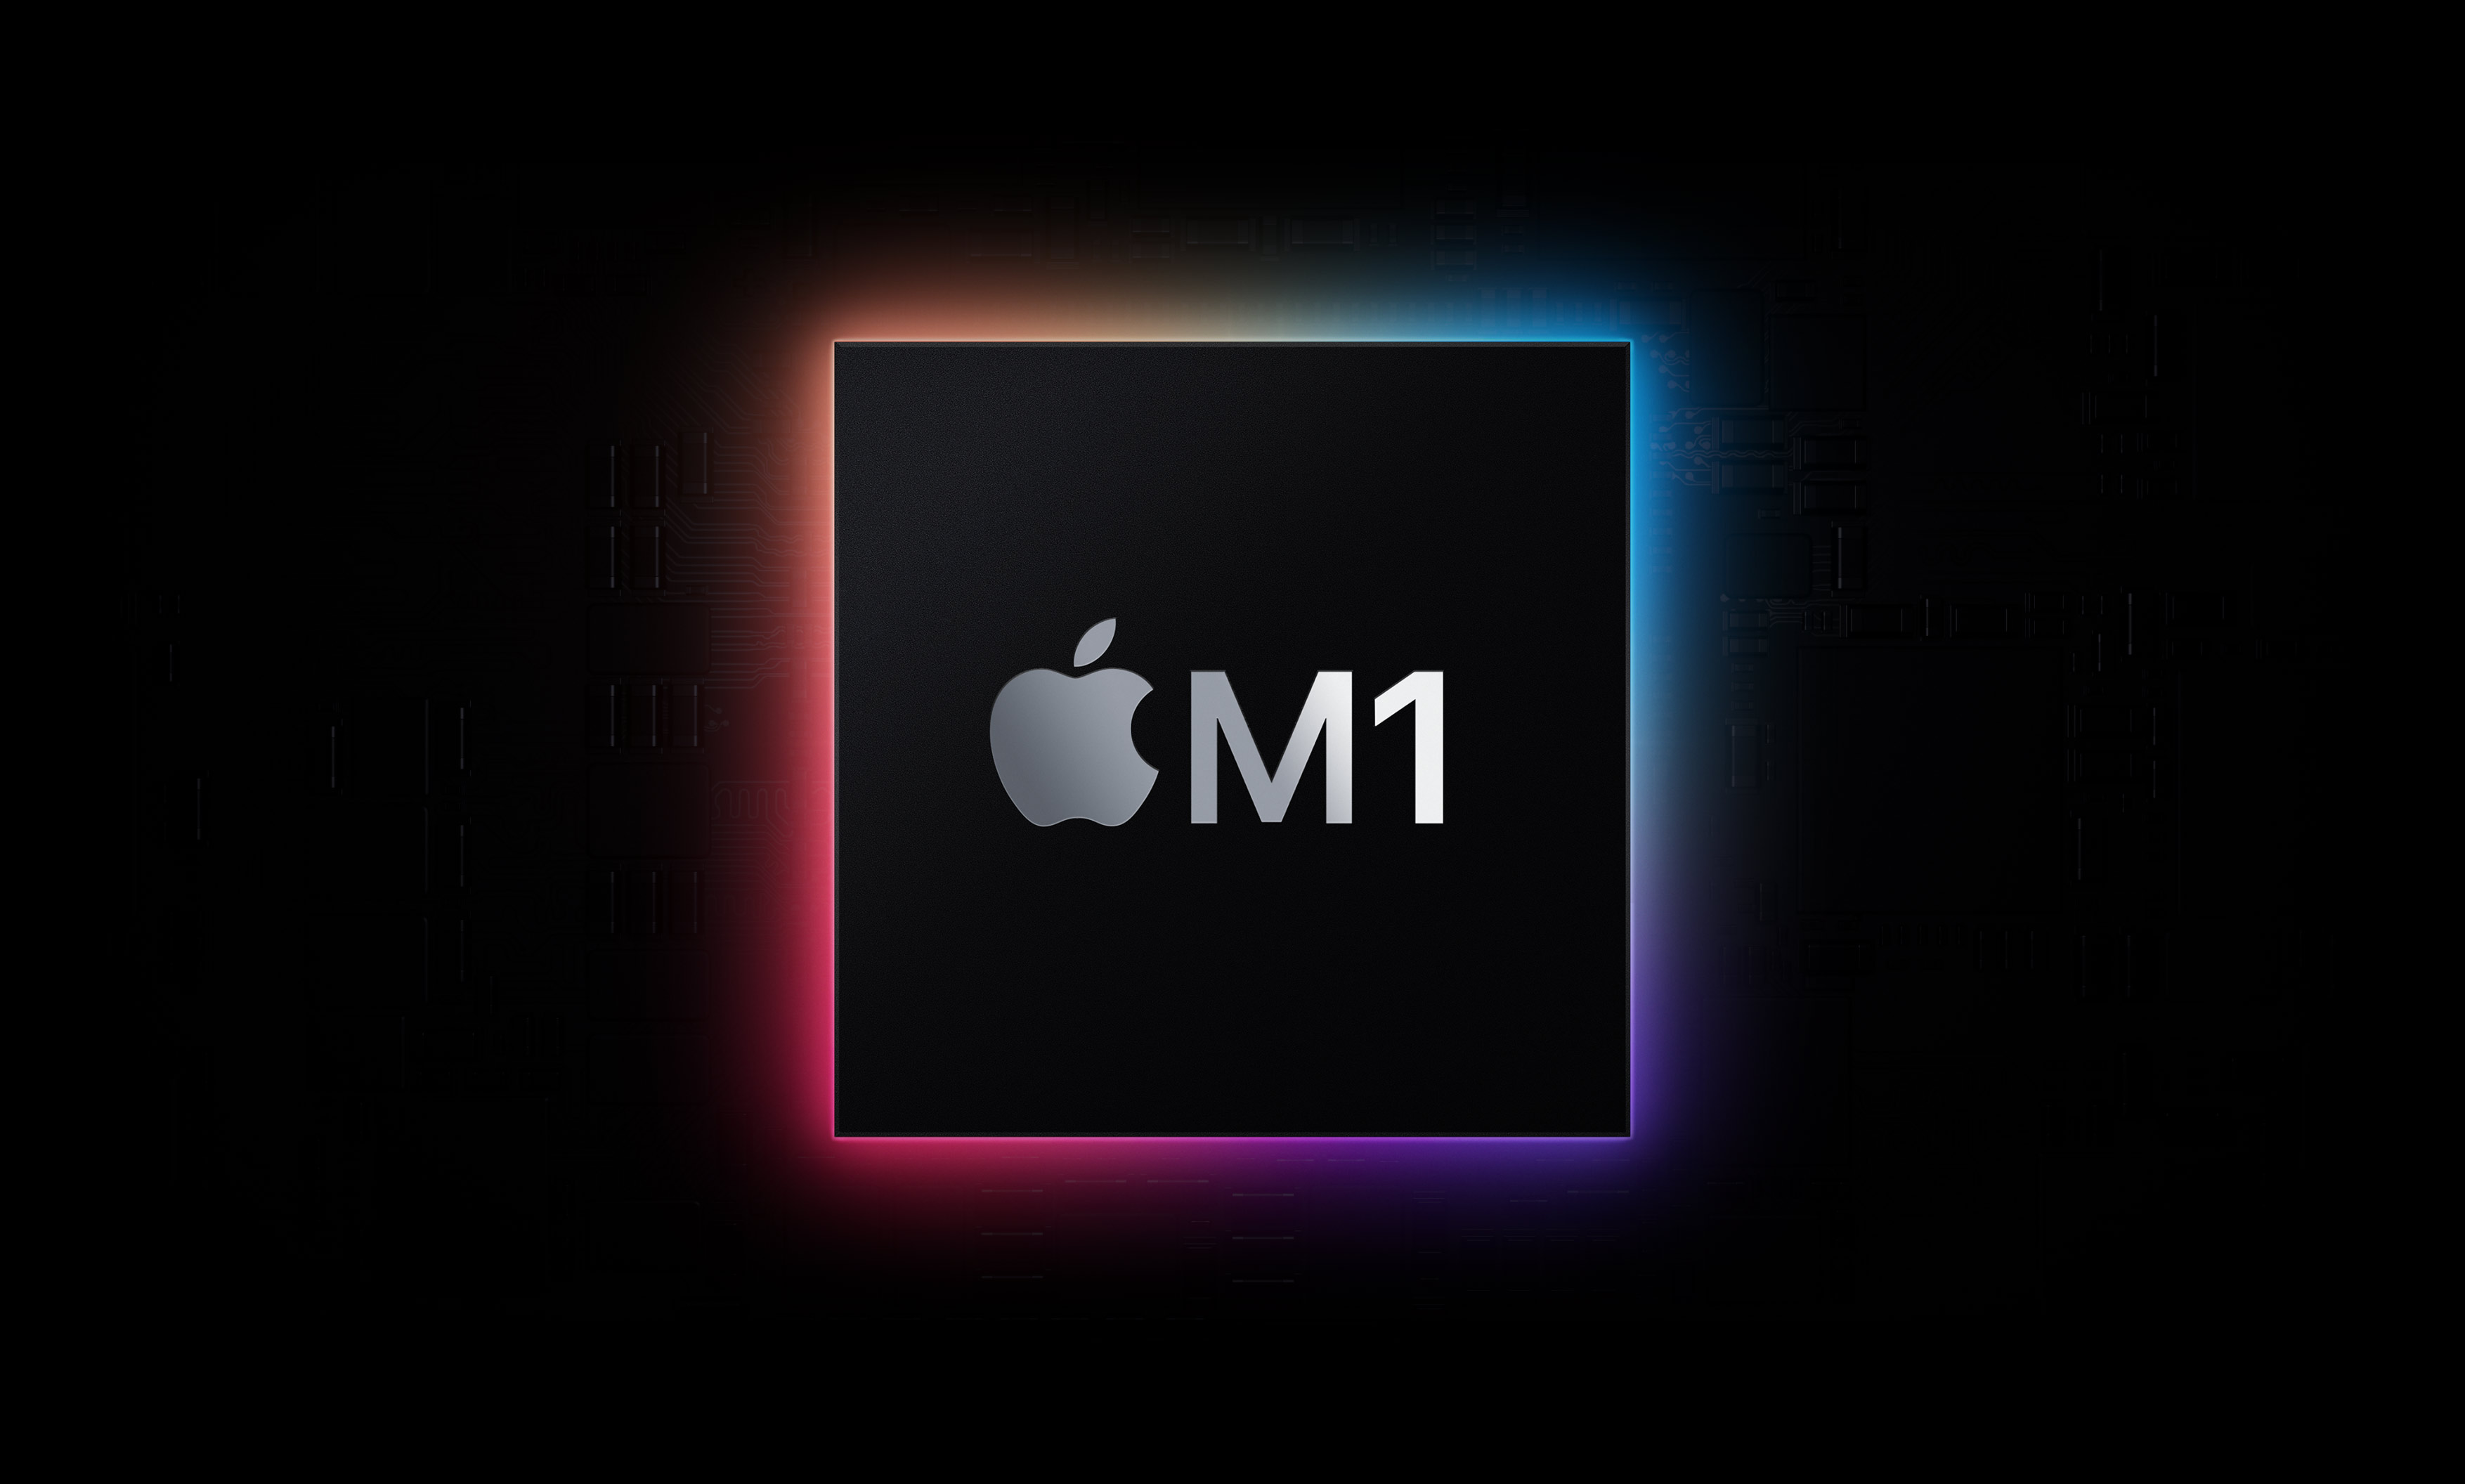 【2022年6月購入】Apple M1 MacBookAir